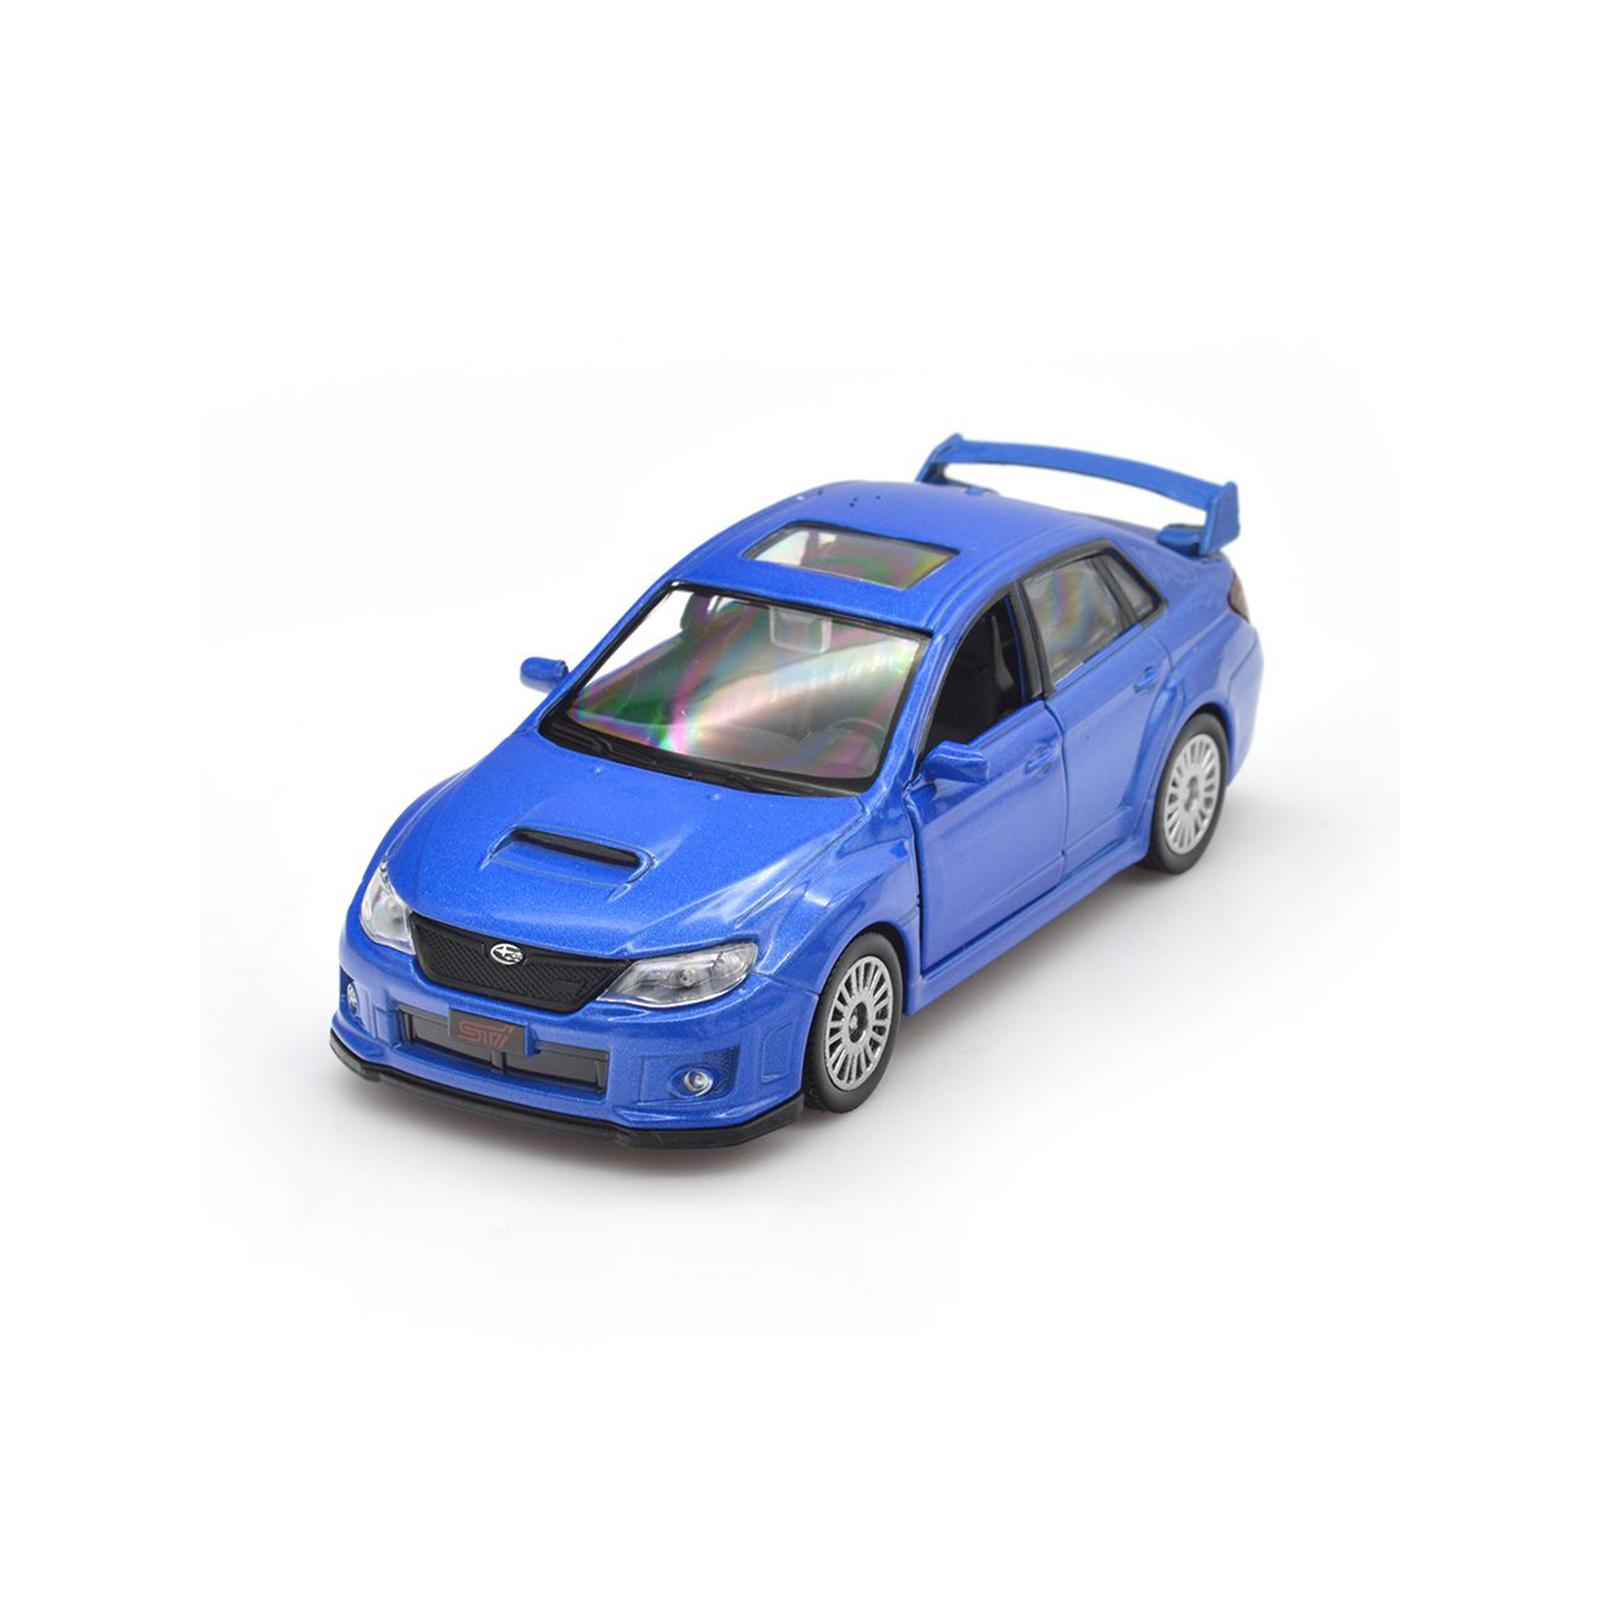 Машина Techno Drive Subaru WRX STI синій (250334U)